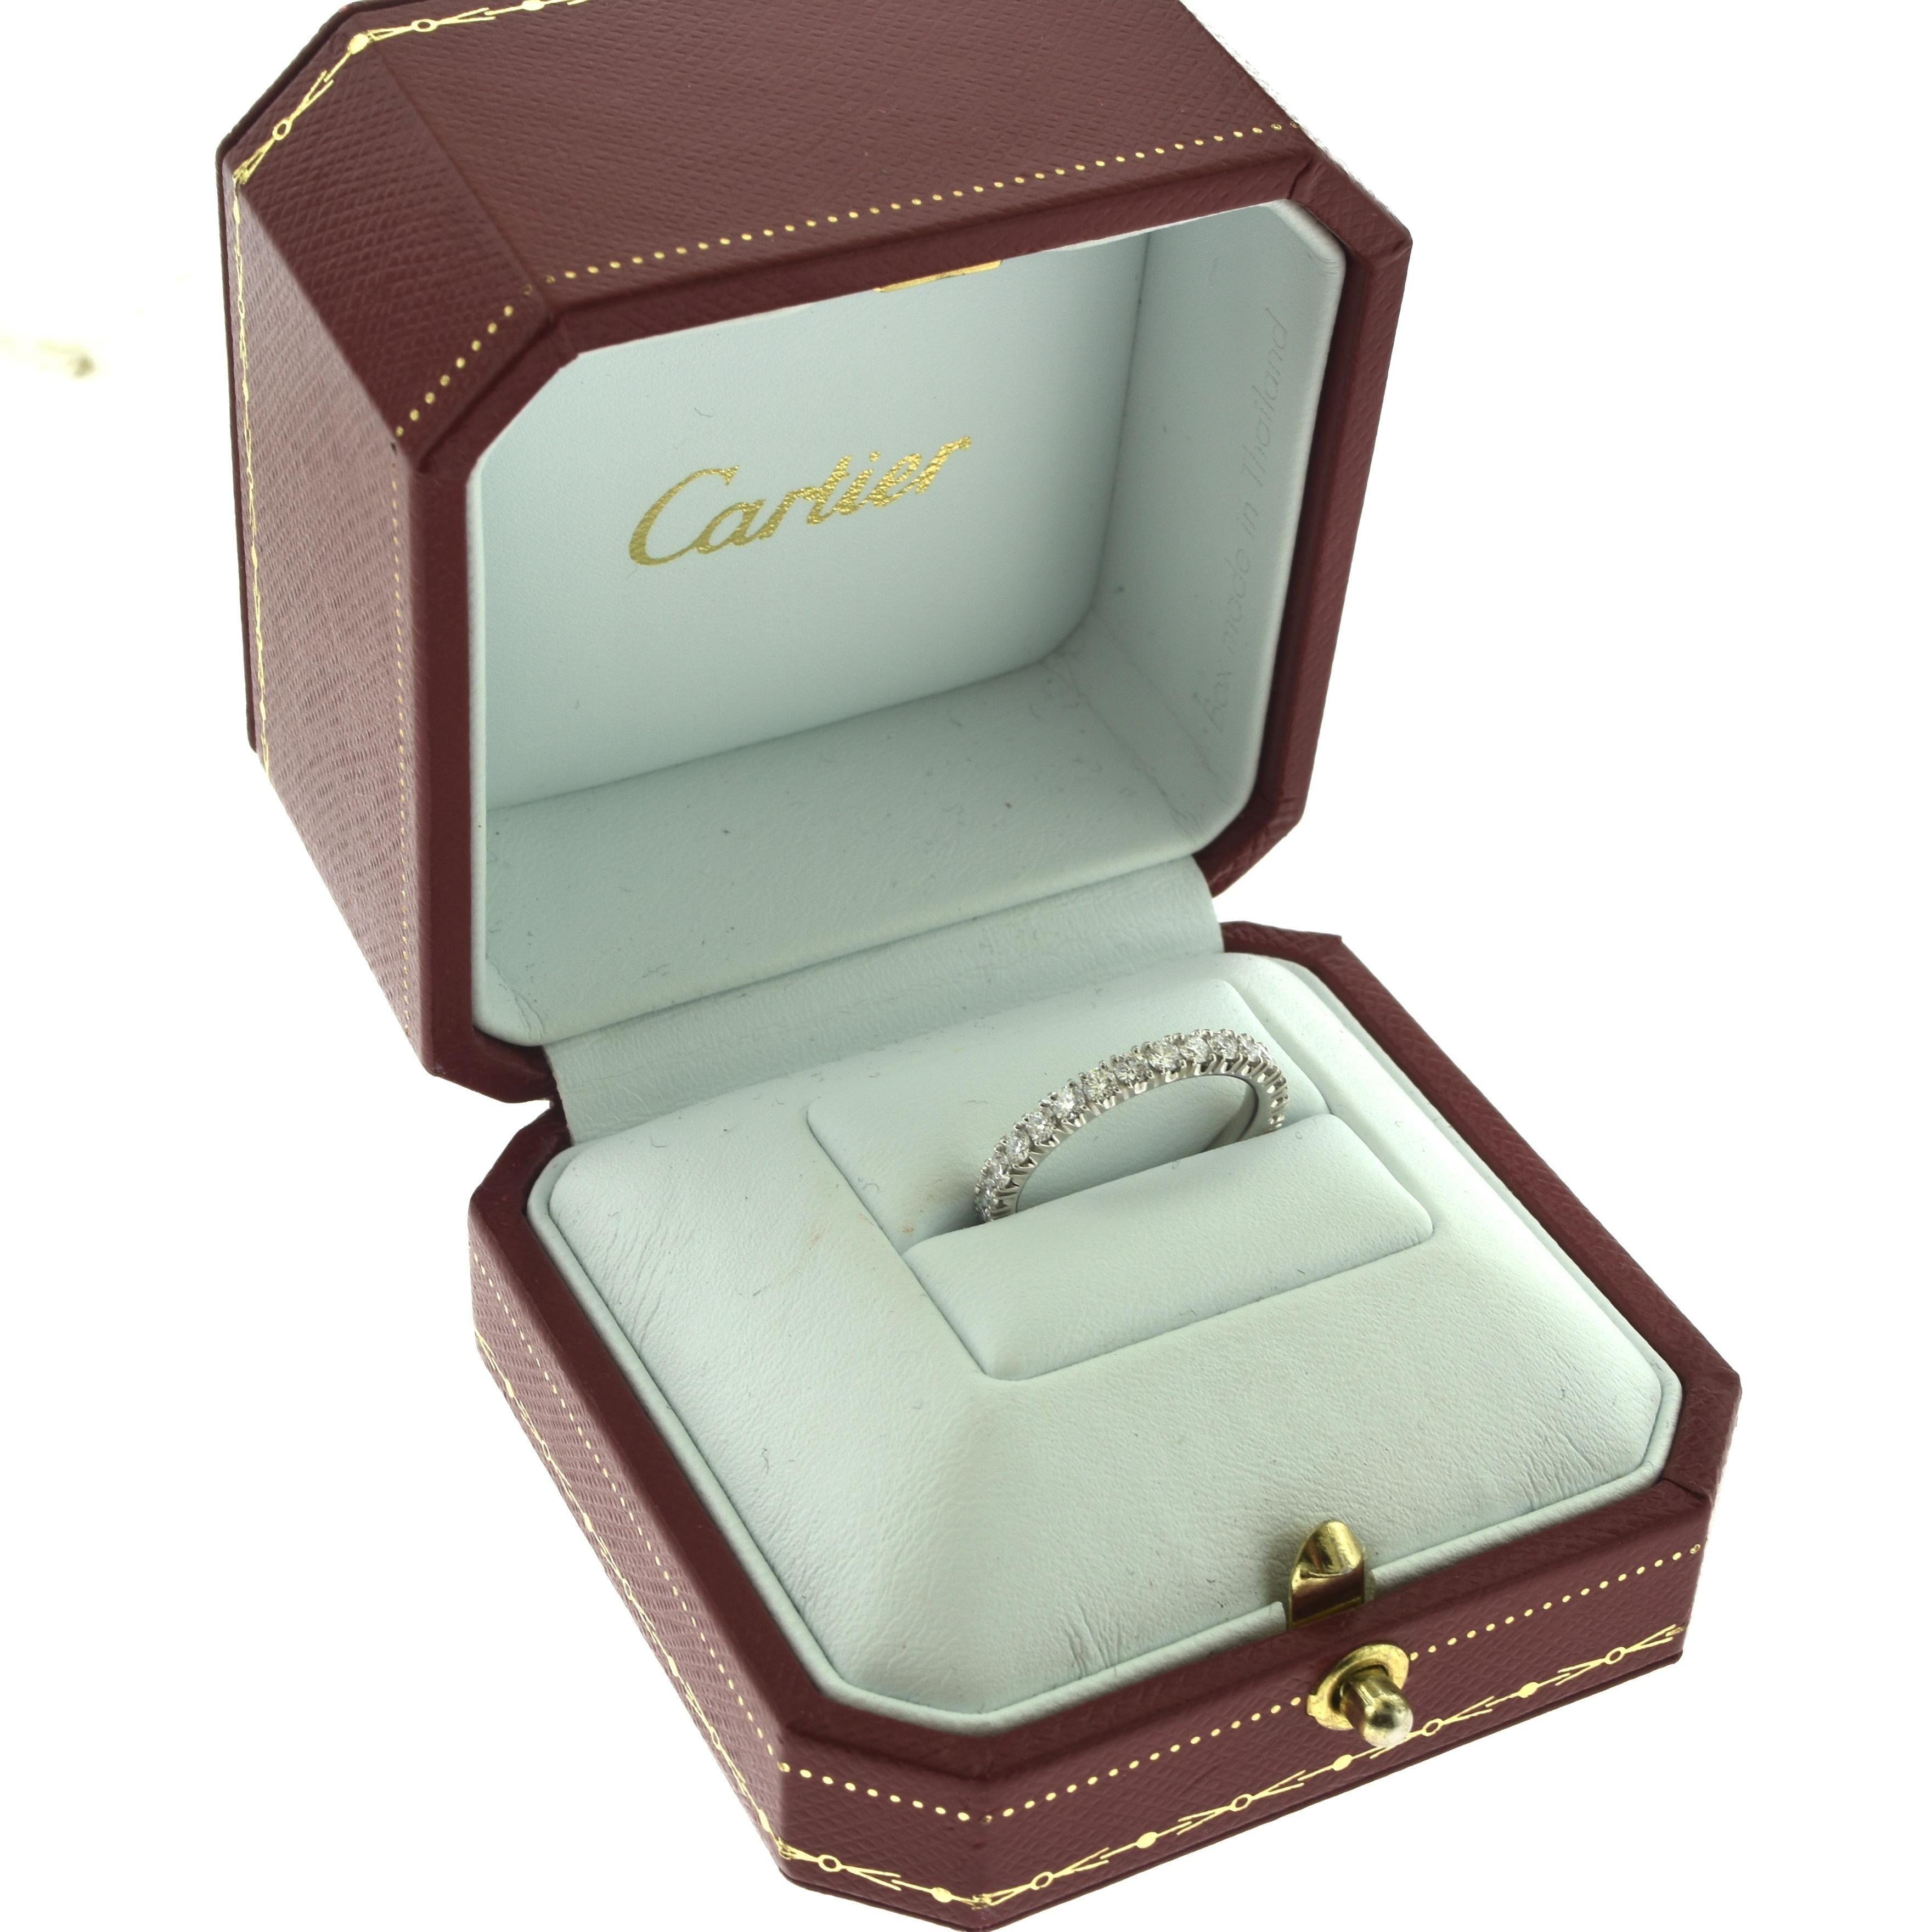 Designer: Cartier

Style: Wedding Band

Collection: Etincelle de Cartier 

Metal: Platinum 

Metal Purity: 950

Stones: 29 Round Brilliant Cut Diamonds

Total Carat Weight : 0.93ct

Total Item Weight (grams): 3.3g

Size: 51

Hallmark:  Cartier 950